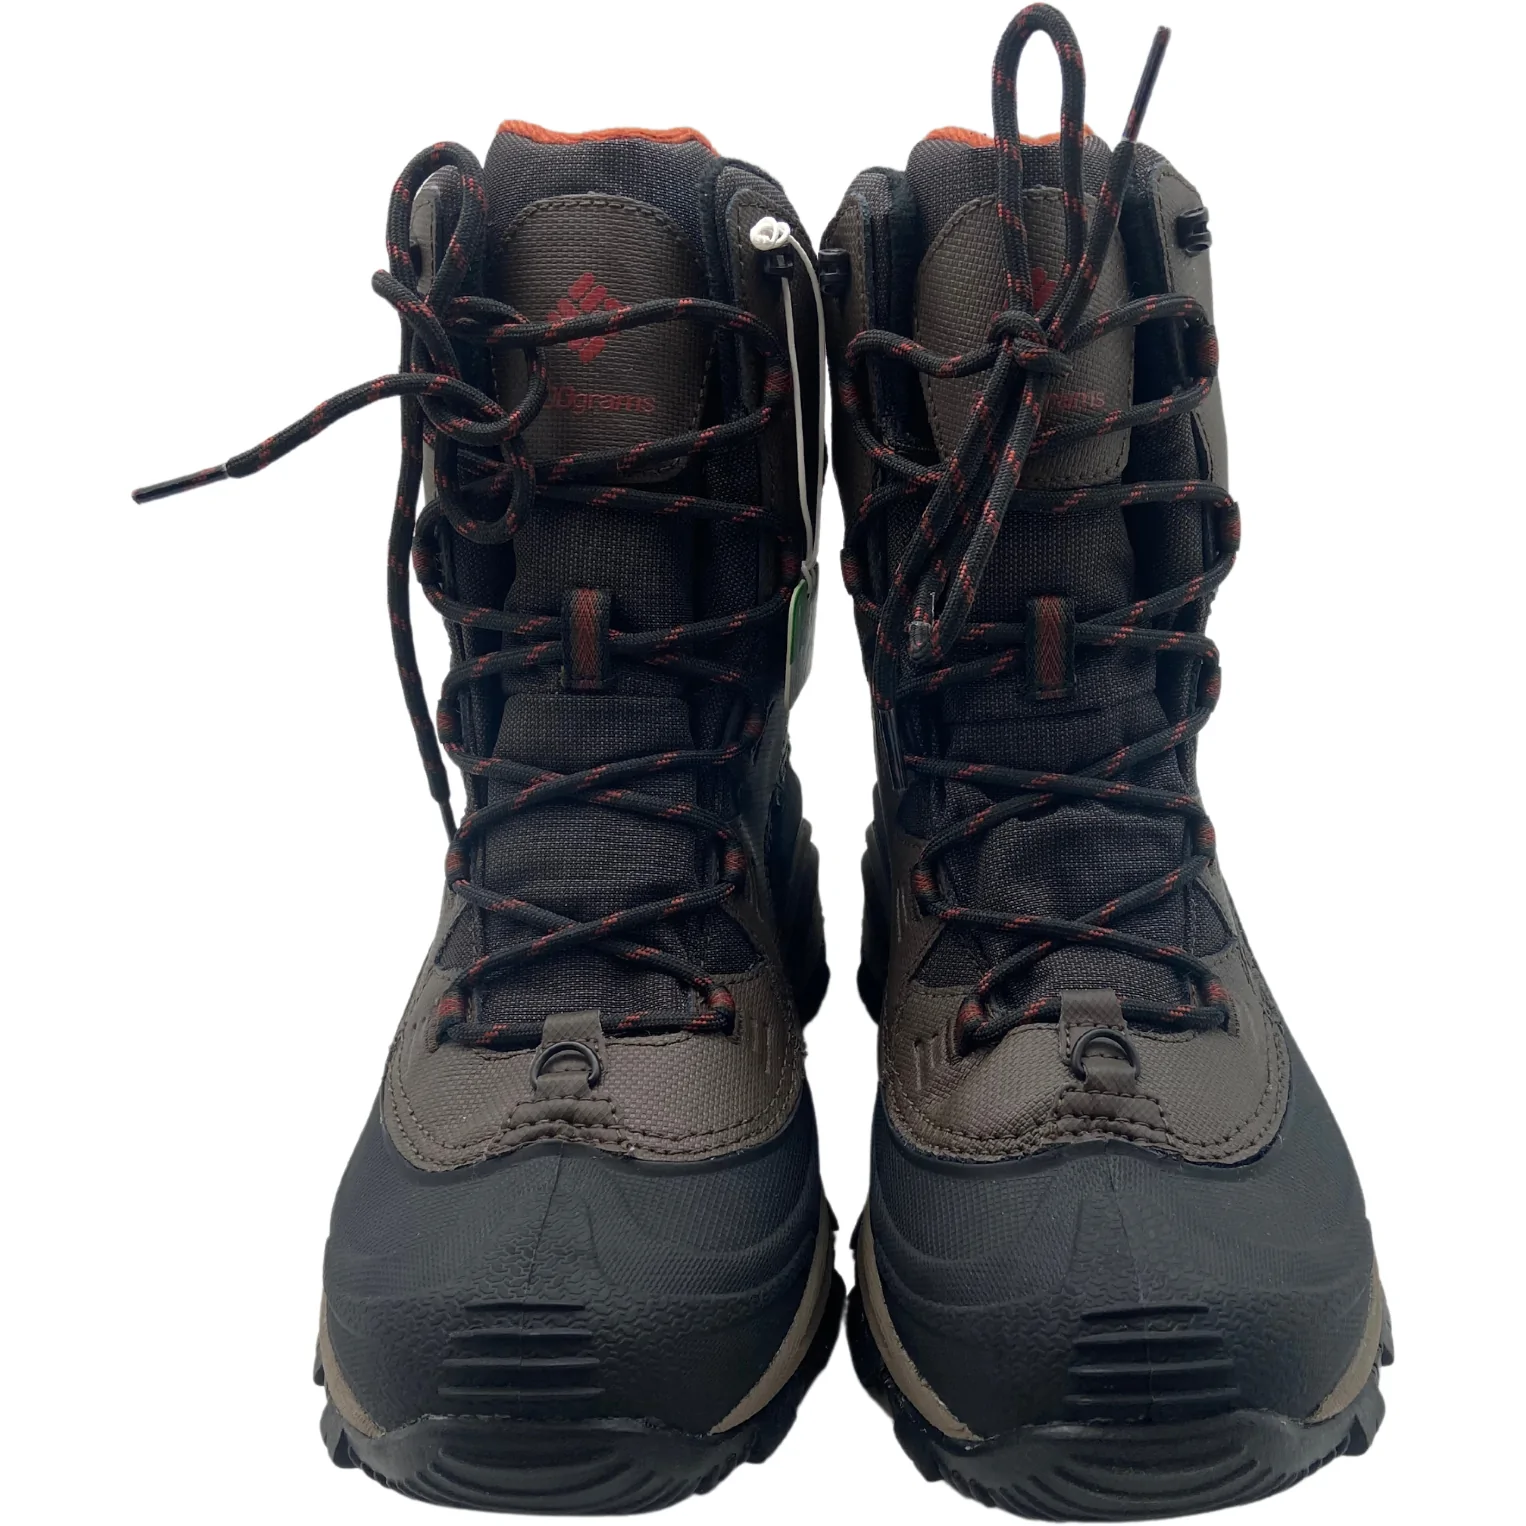 Columbia: Men's Winter Boots / Bugaboot III / Brown / Black / Size 7.5